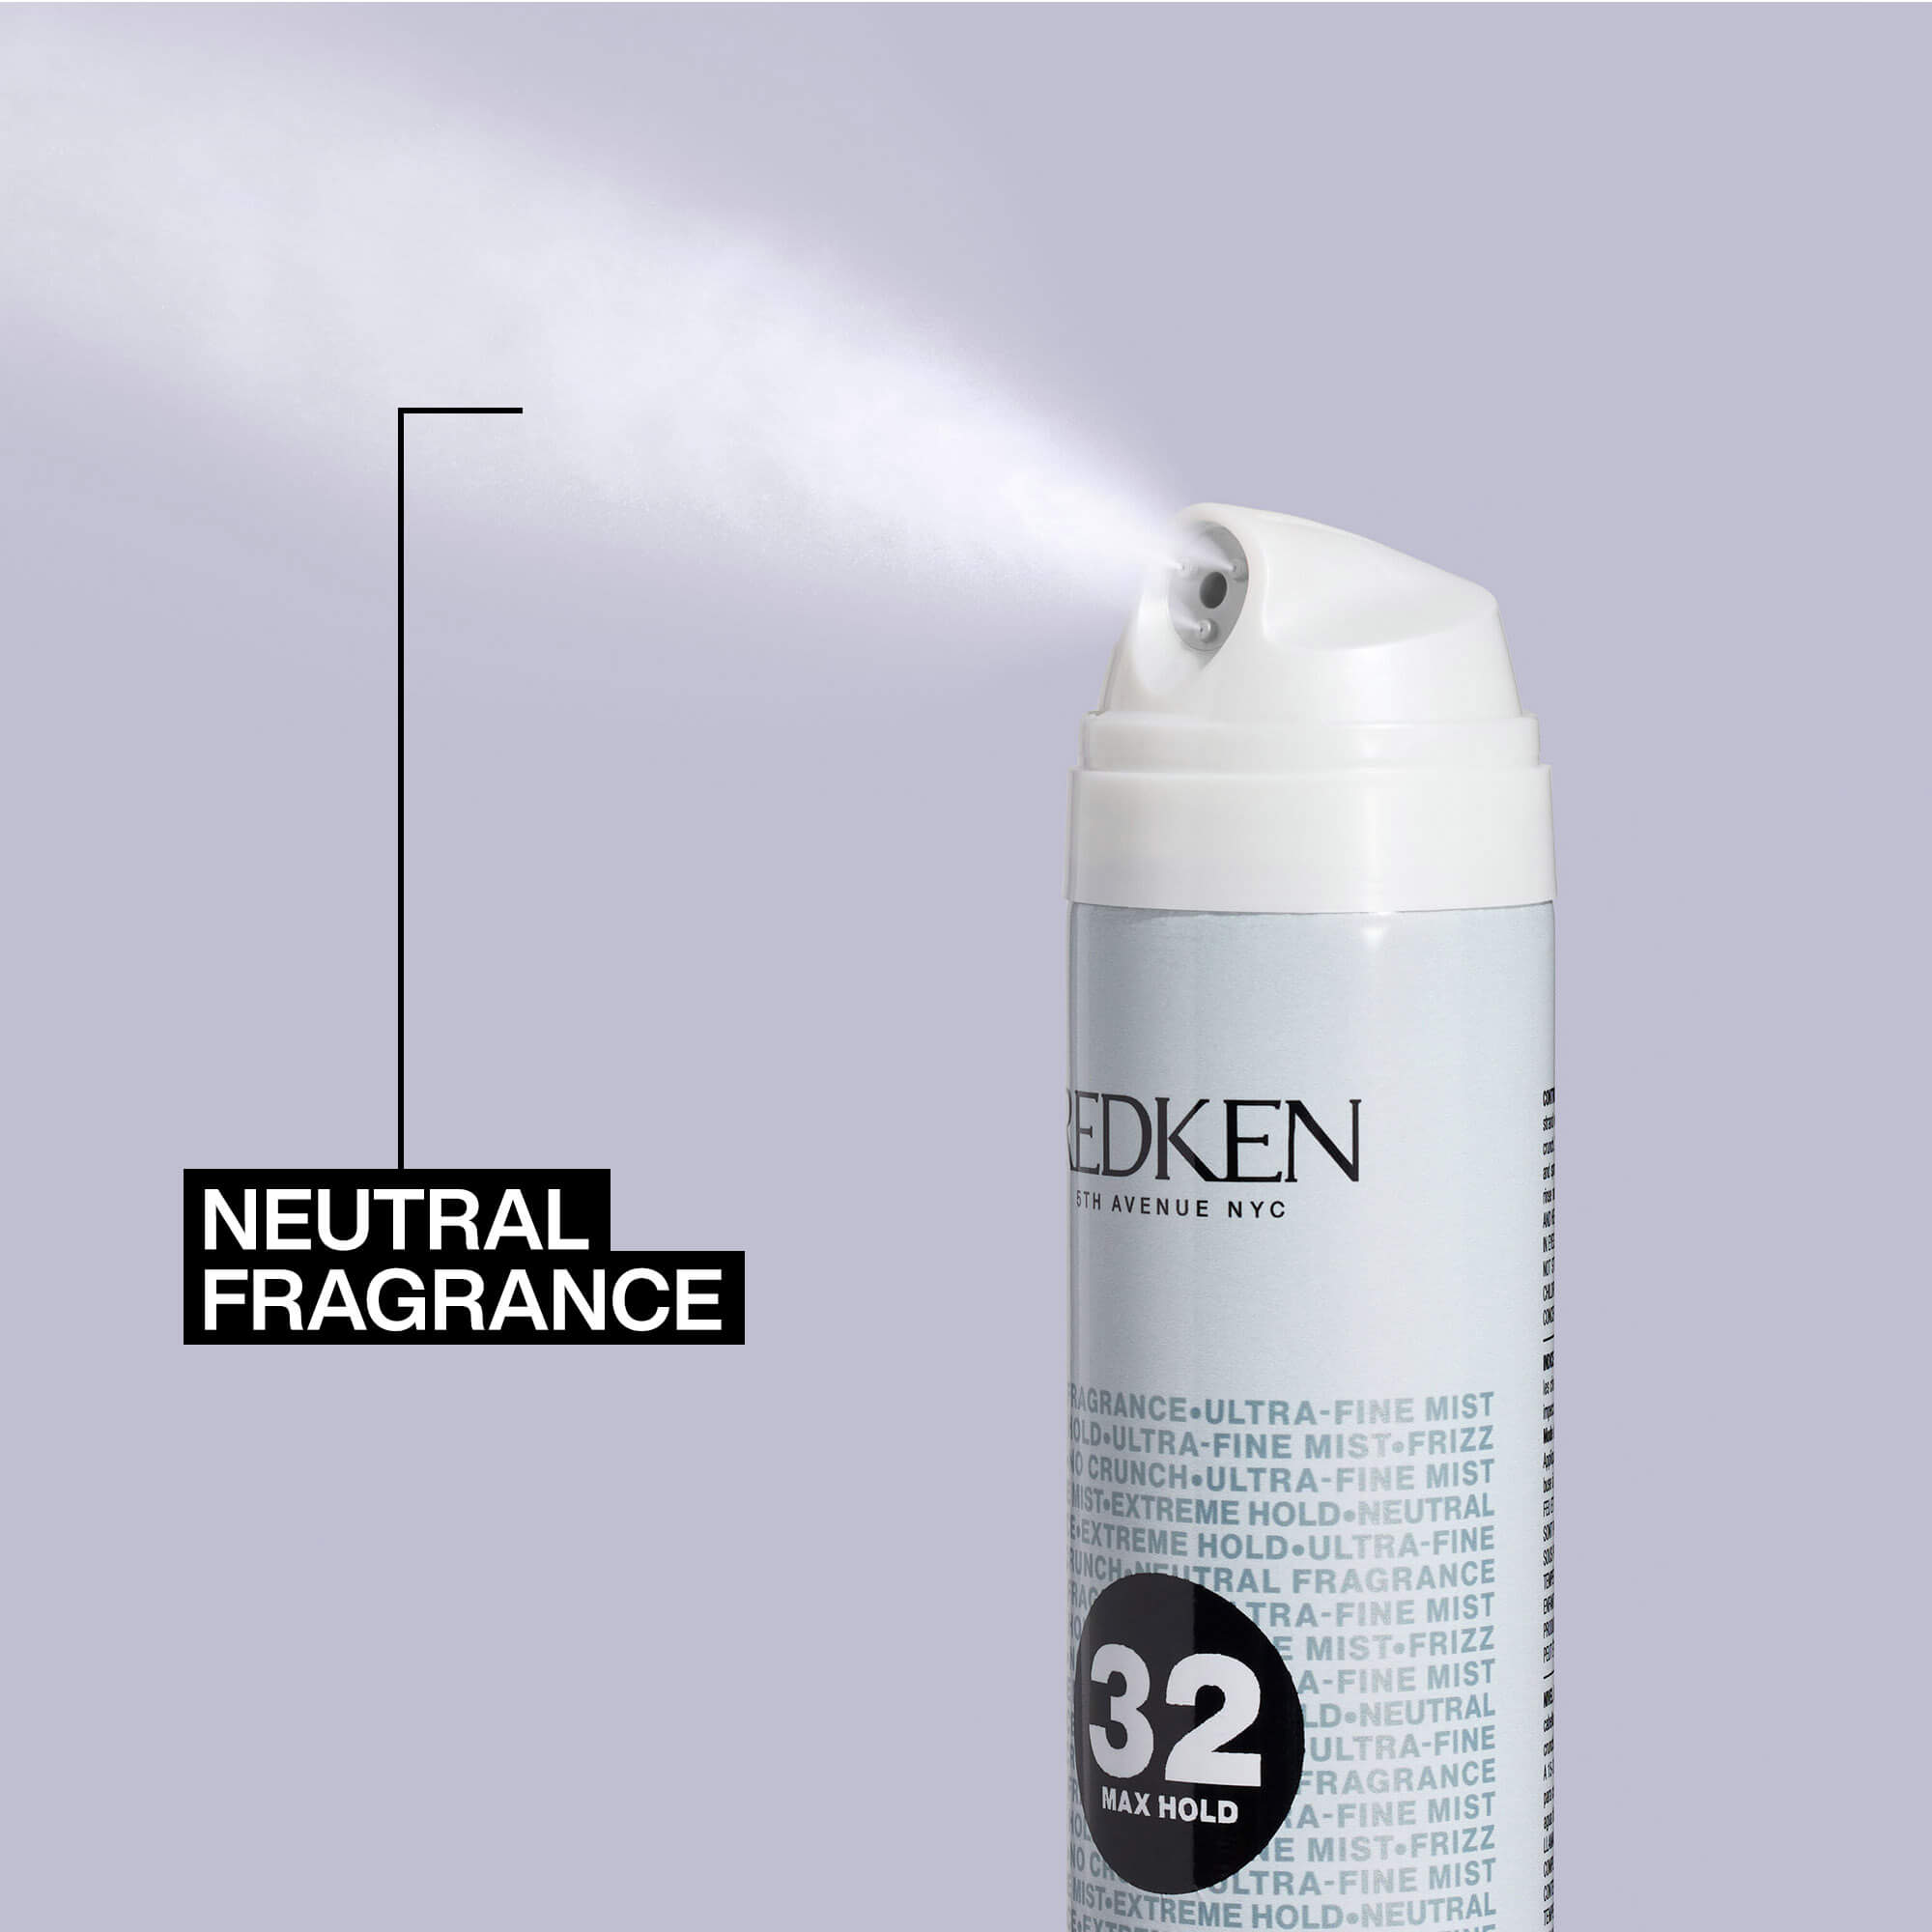 Triple Pure 32 Volumizing No Scent Hairspray - Redken Canada